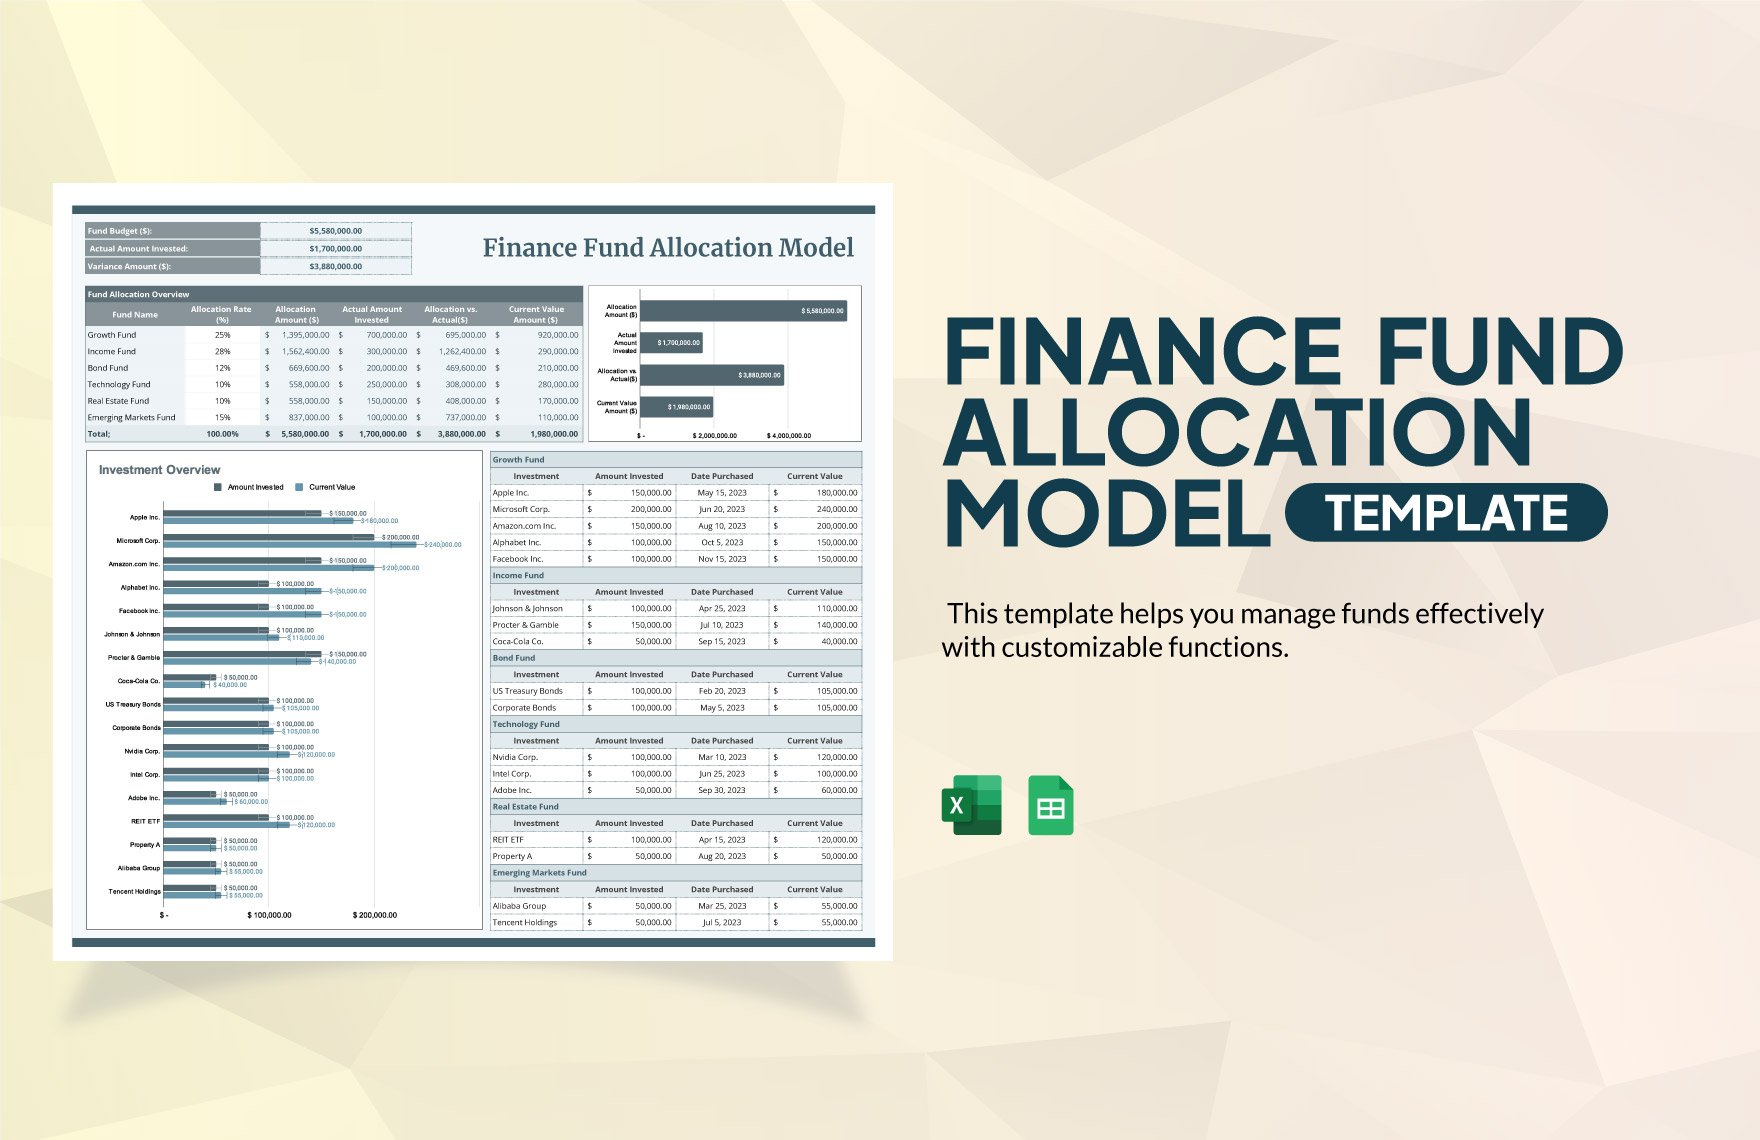 Finance Fund Allocation Model Template